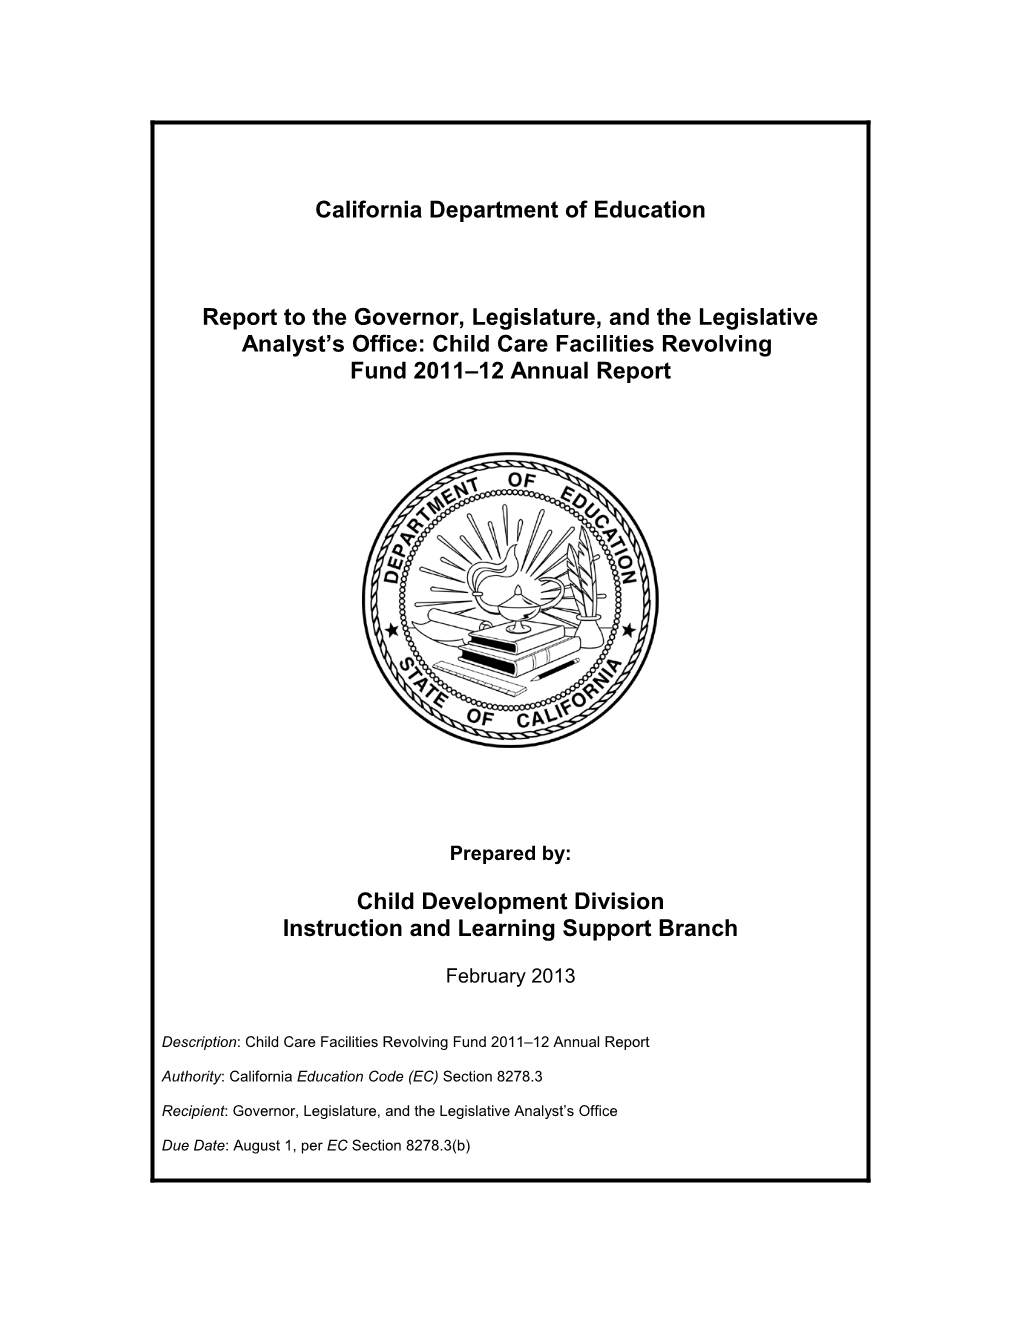 CCFRF 2011-12 Annual Report - Child Development (CA Dept of Education)